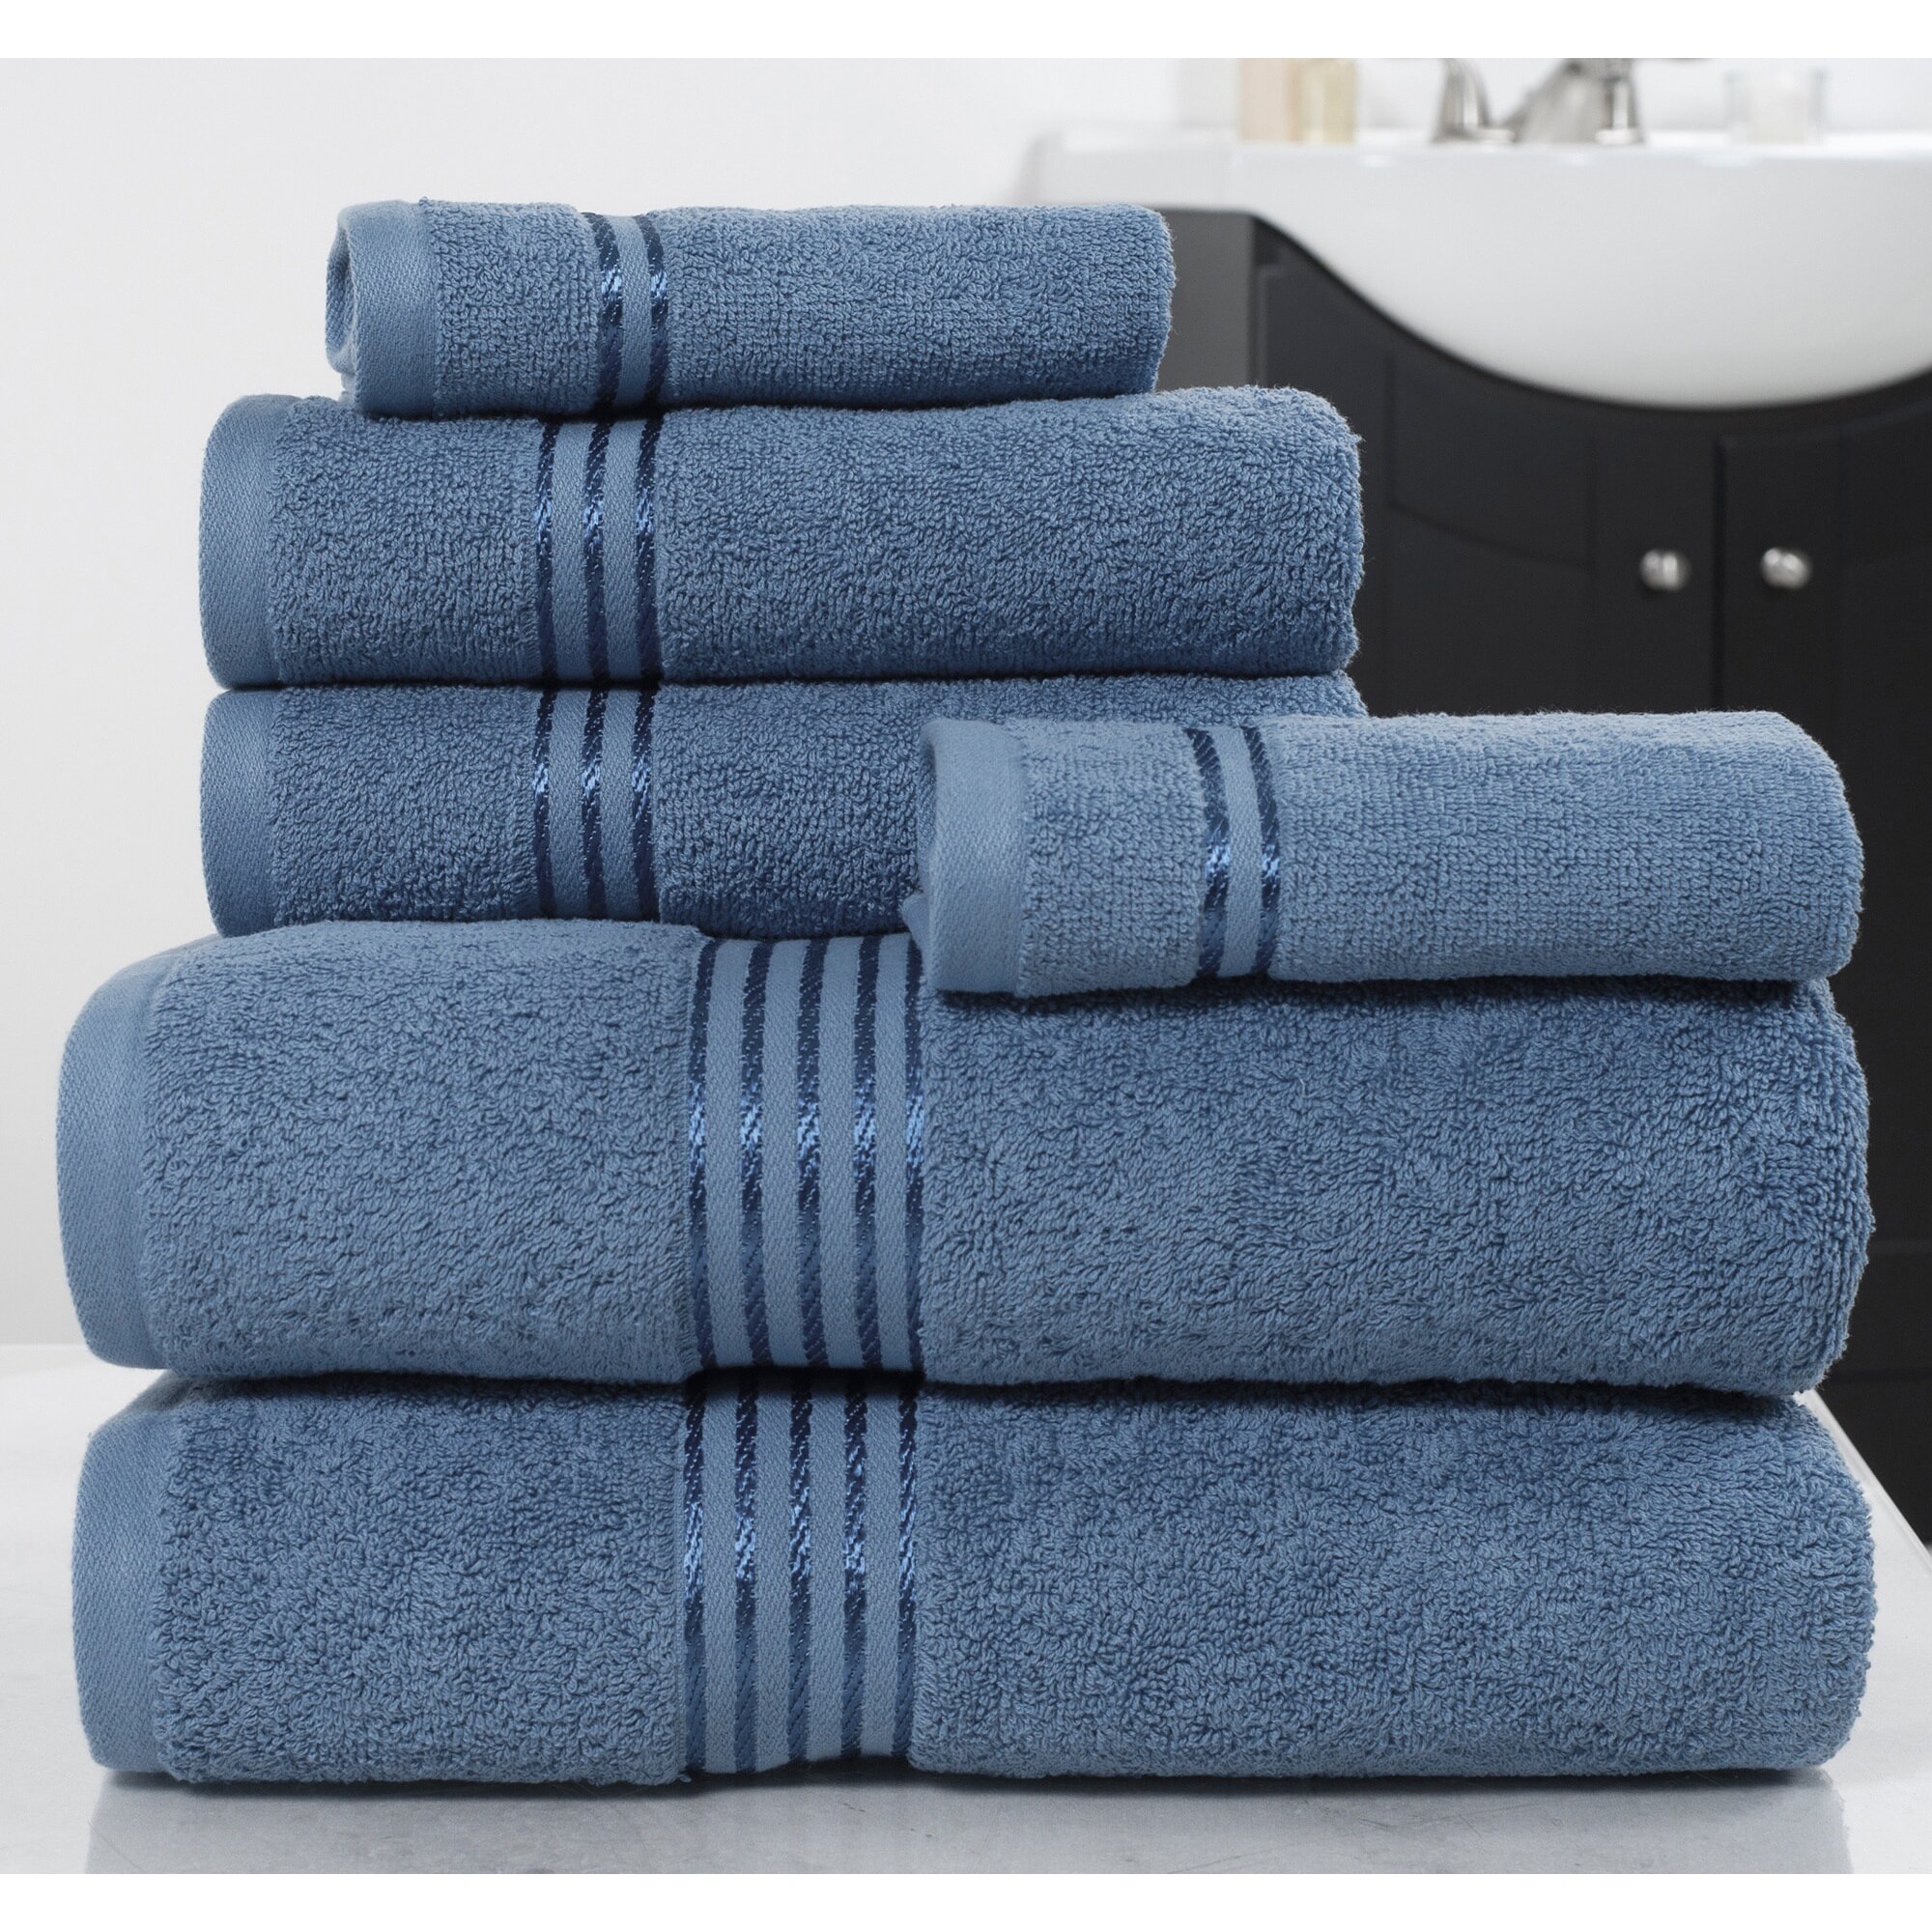 https://ak1.ostkcdn.com/images/products/is/images/direct/44f6524178de2d233b709bf5ab5d63638cd2785f/Windsor-Home-100-percent-Cotton-Hotel-6-piece-Towel-Set.jpg